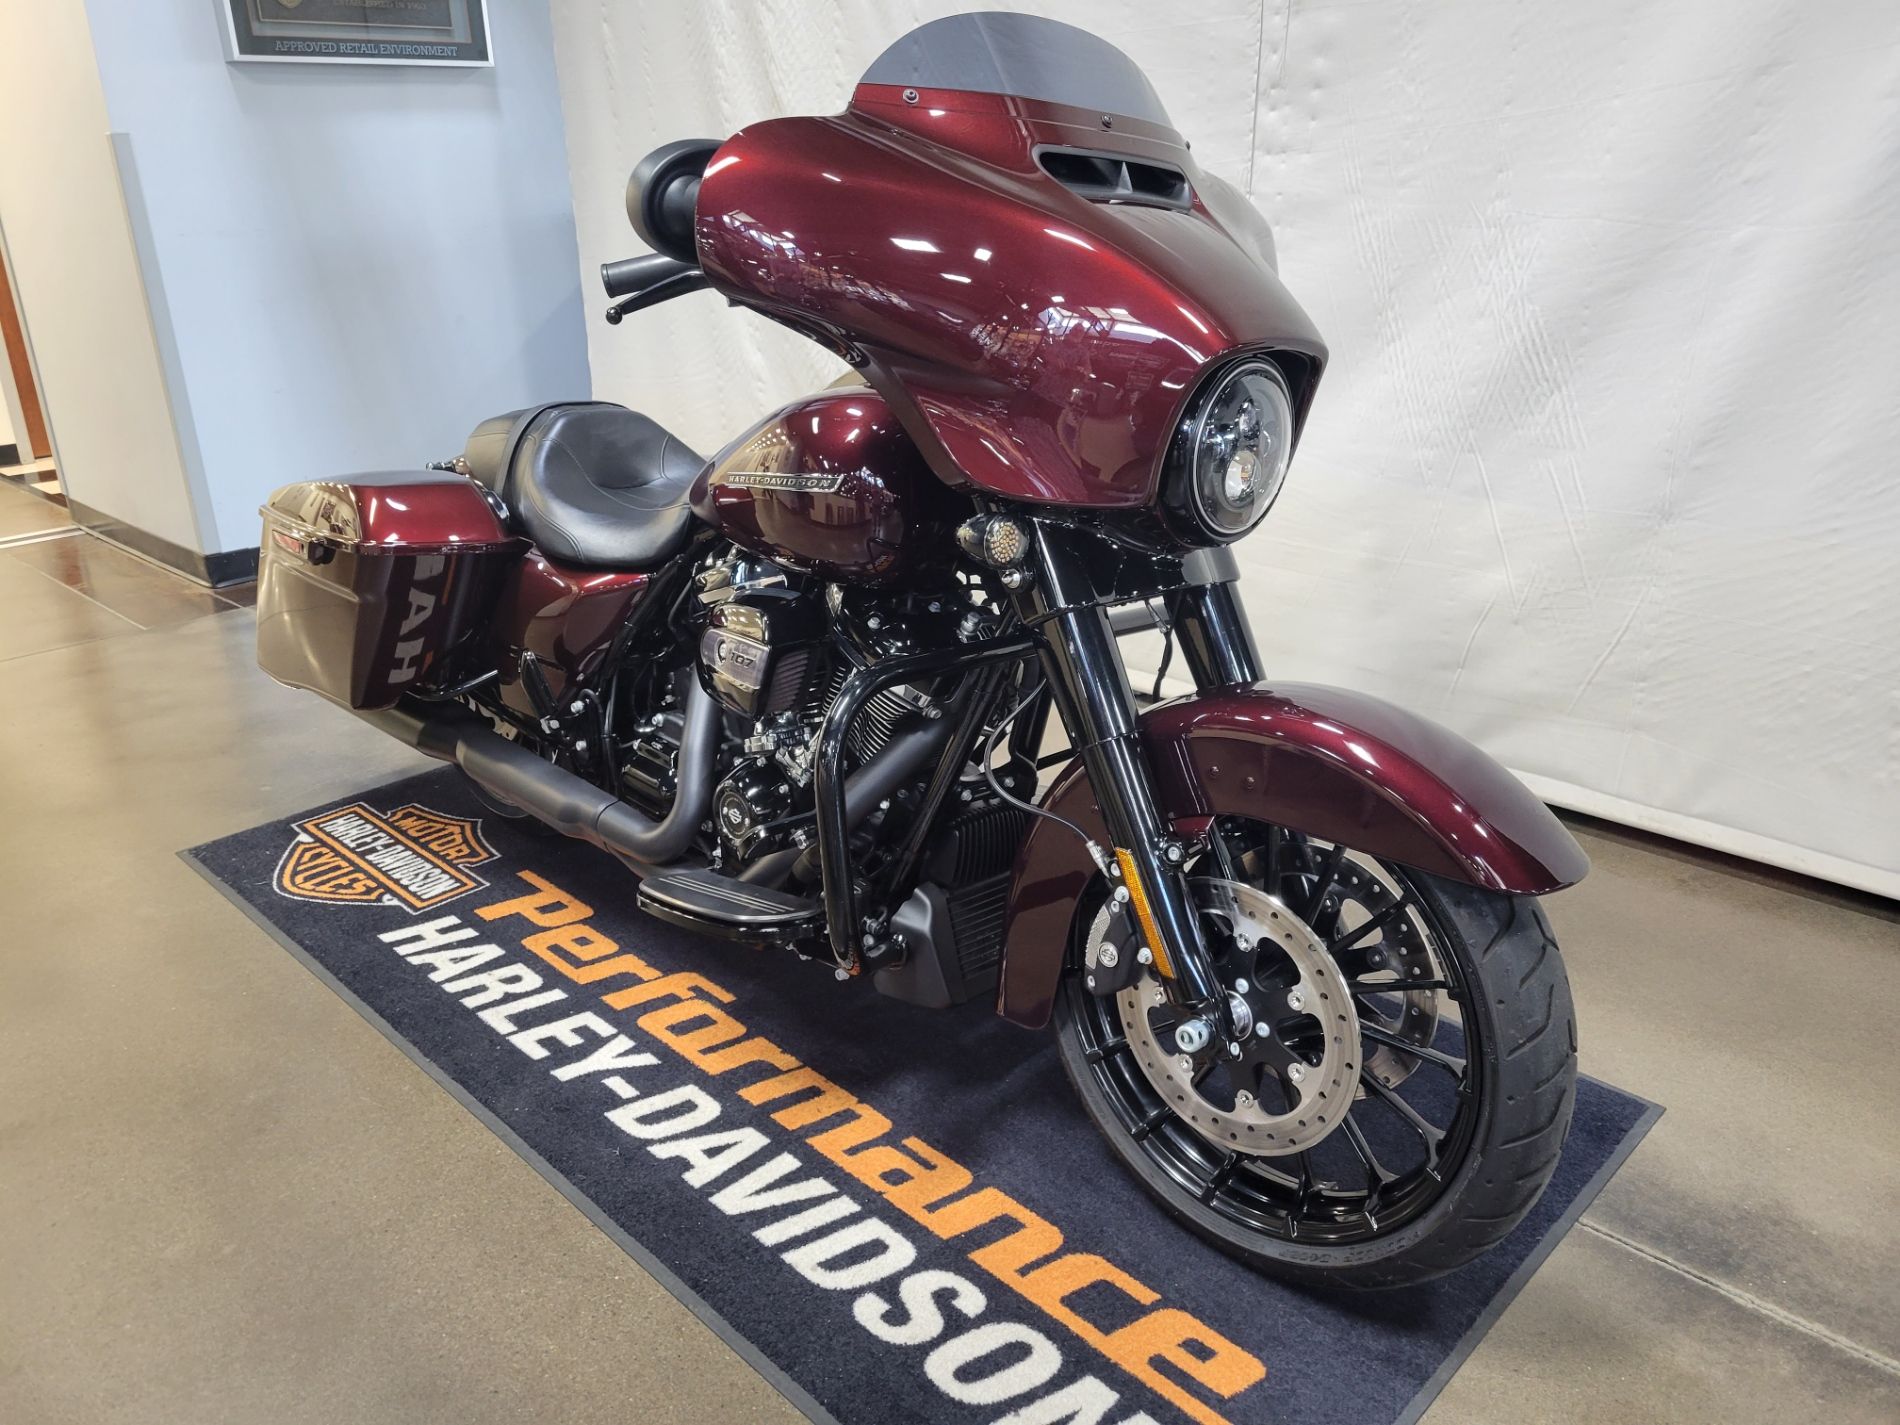 2018 Harley-Davidson Street Glide® Special in Syracuse, New York - Photo 2